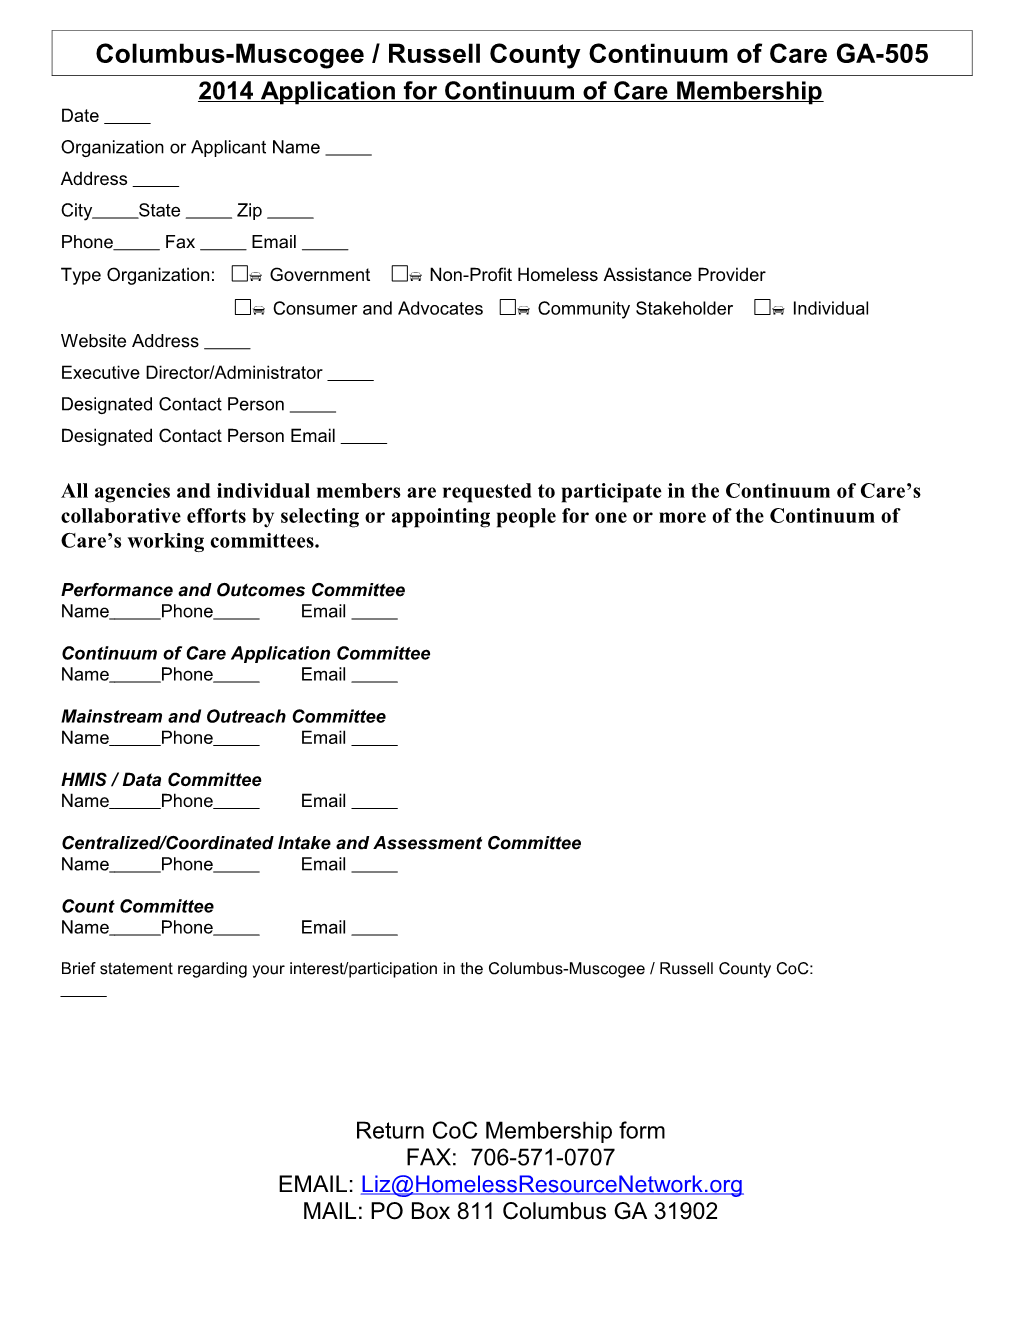 Application for 2003 Membership